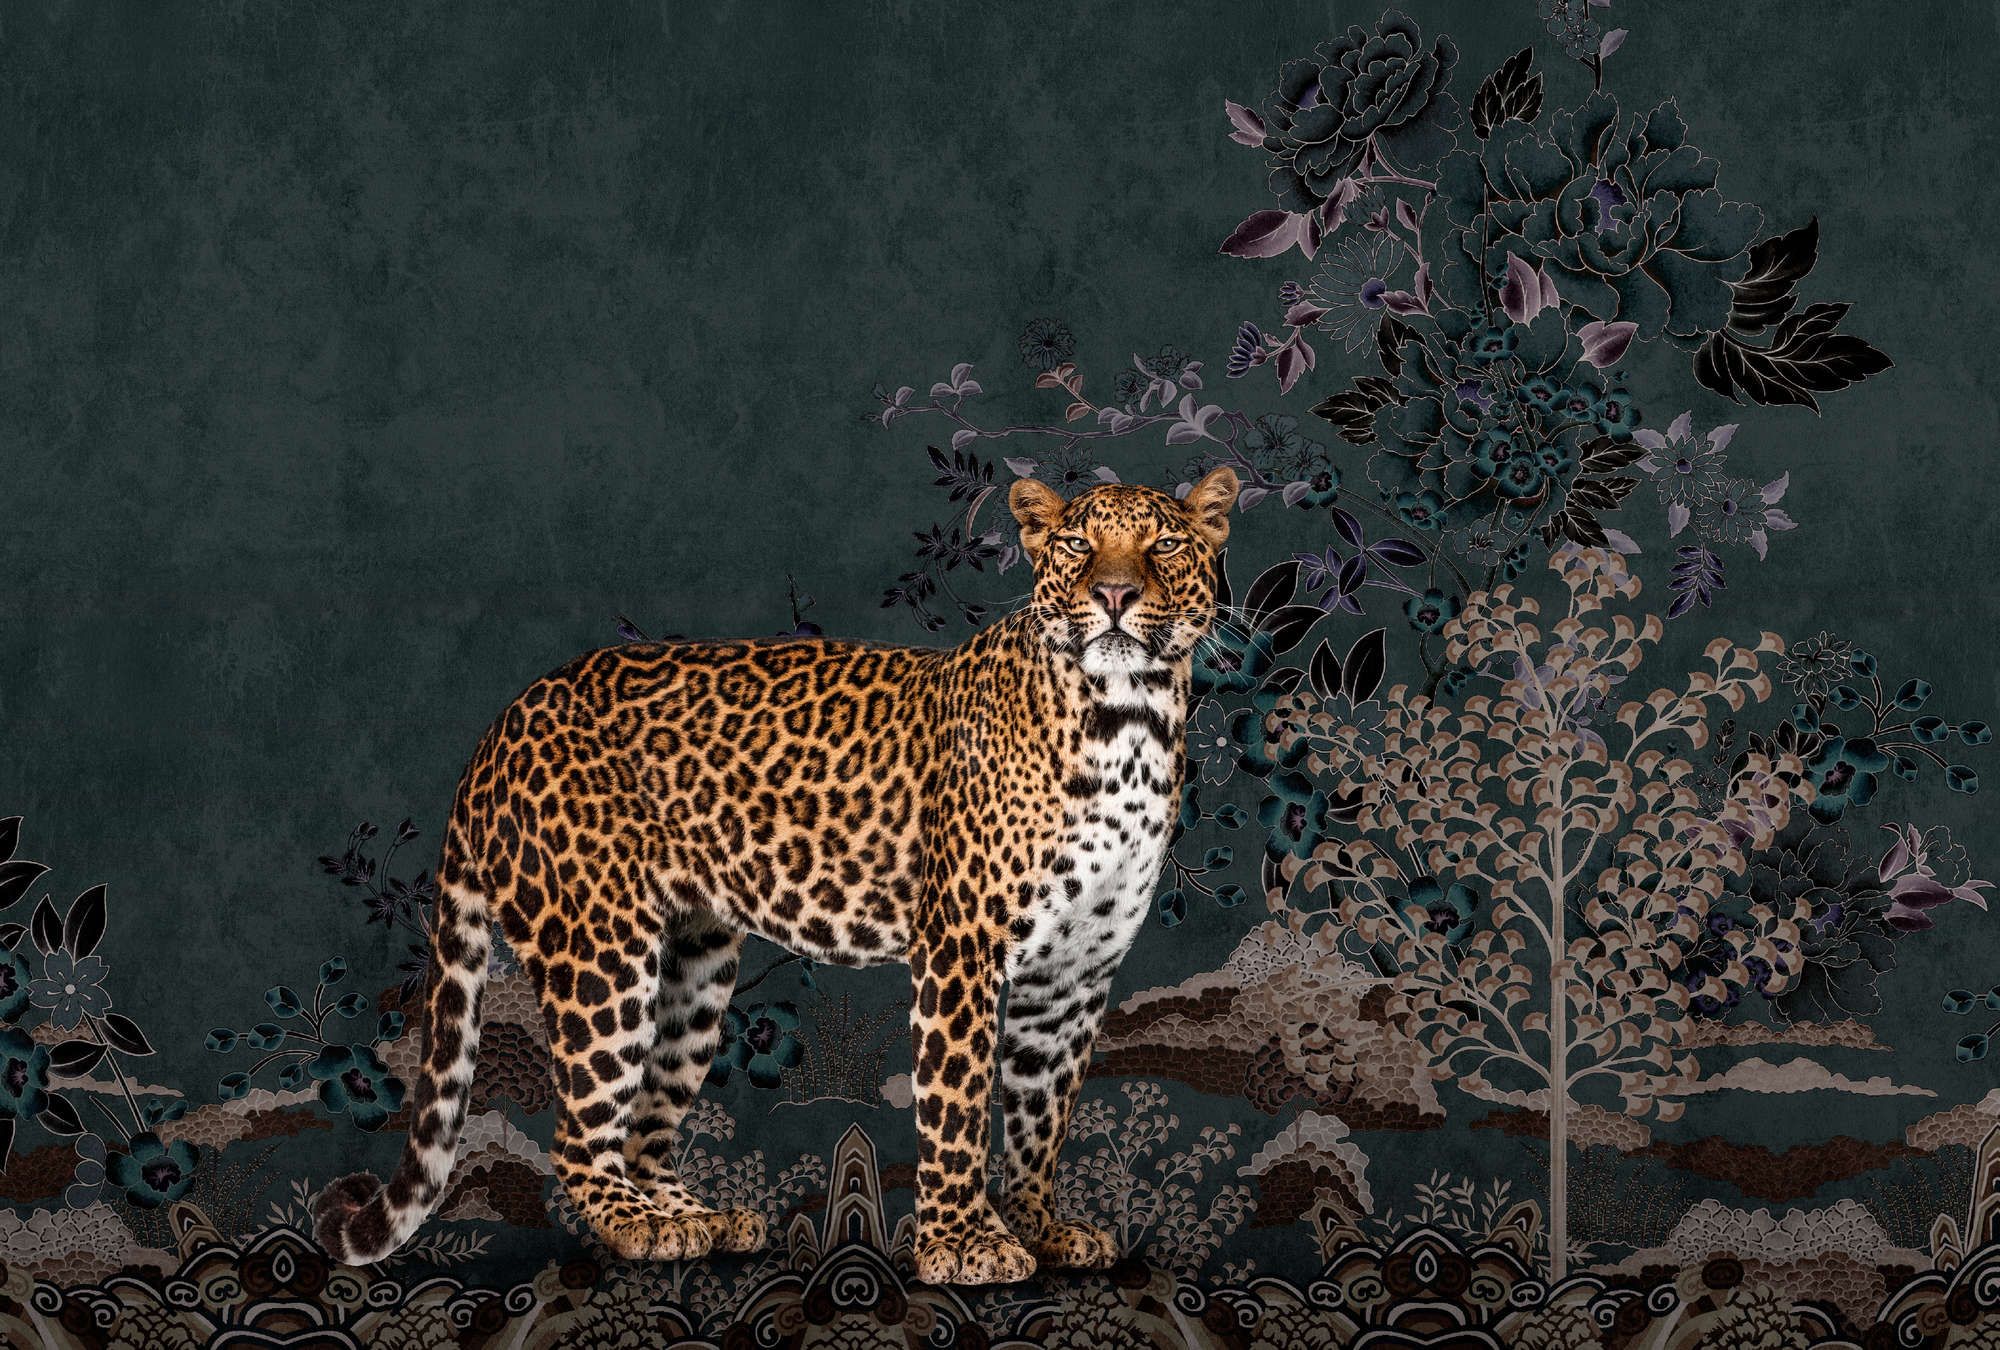             Photo wallpaper »rani« - Abstract jungle motif with leopard - Matt, smooth non-woven fabric
        